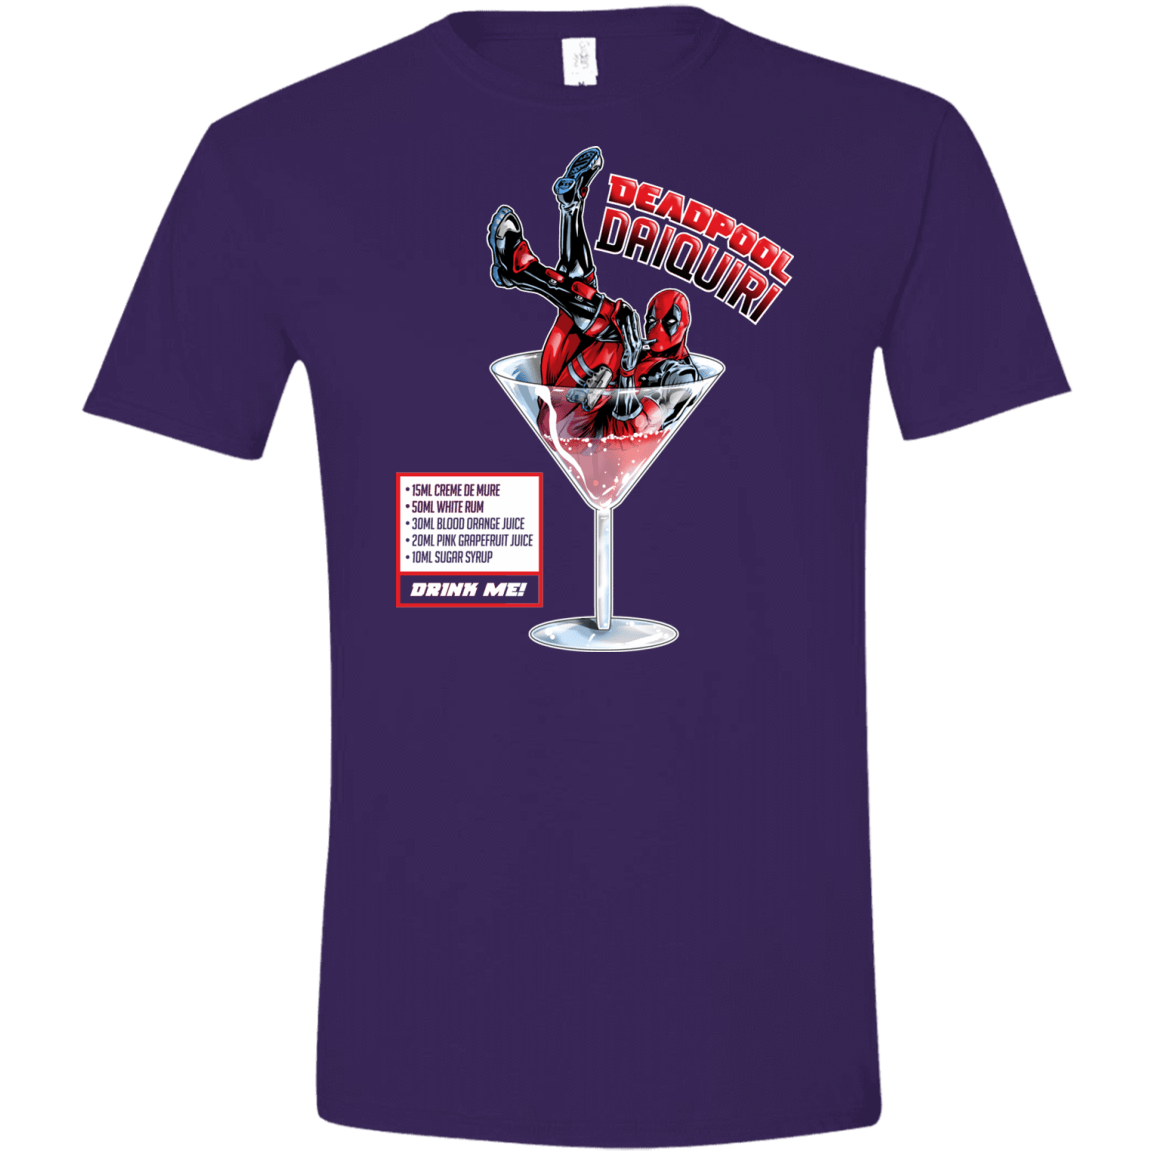 T-Shirts Purple / S Deadpool Daiquiri Men's Semi-Fitted Softstyle